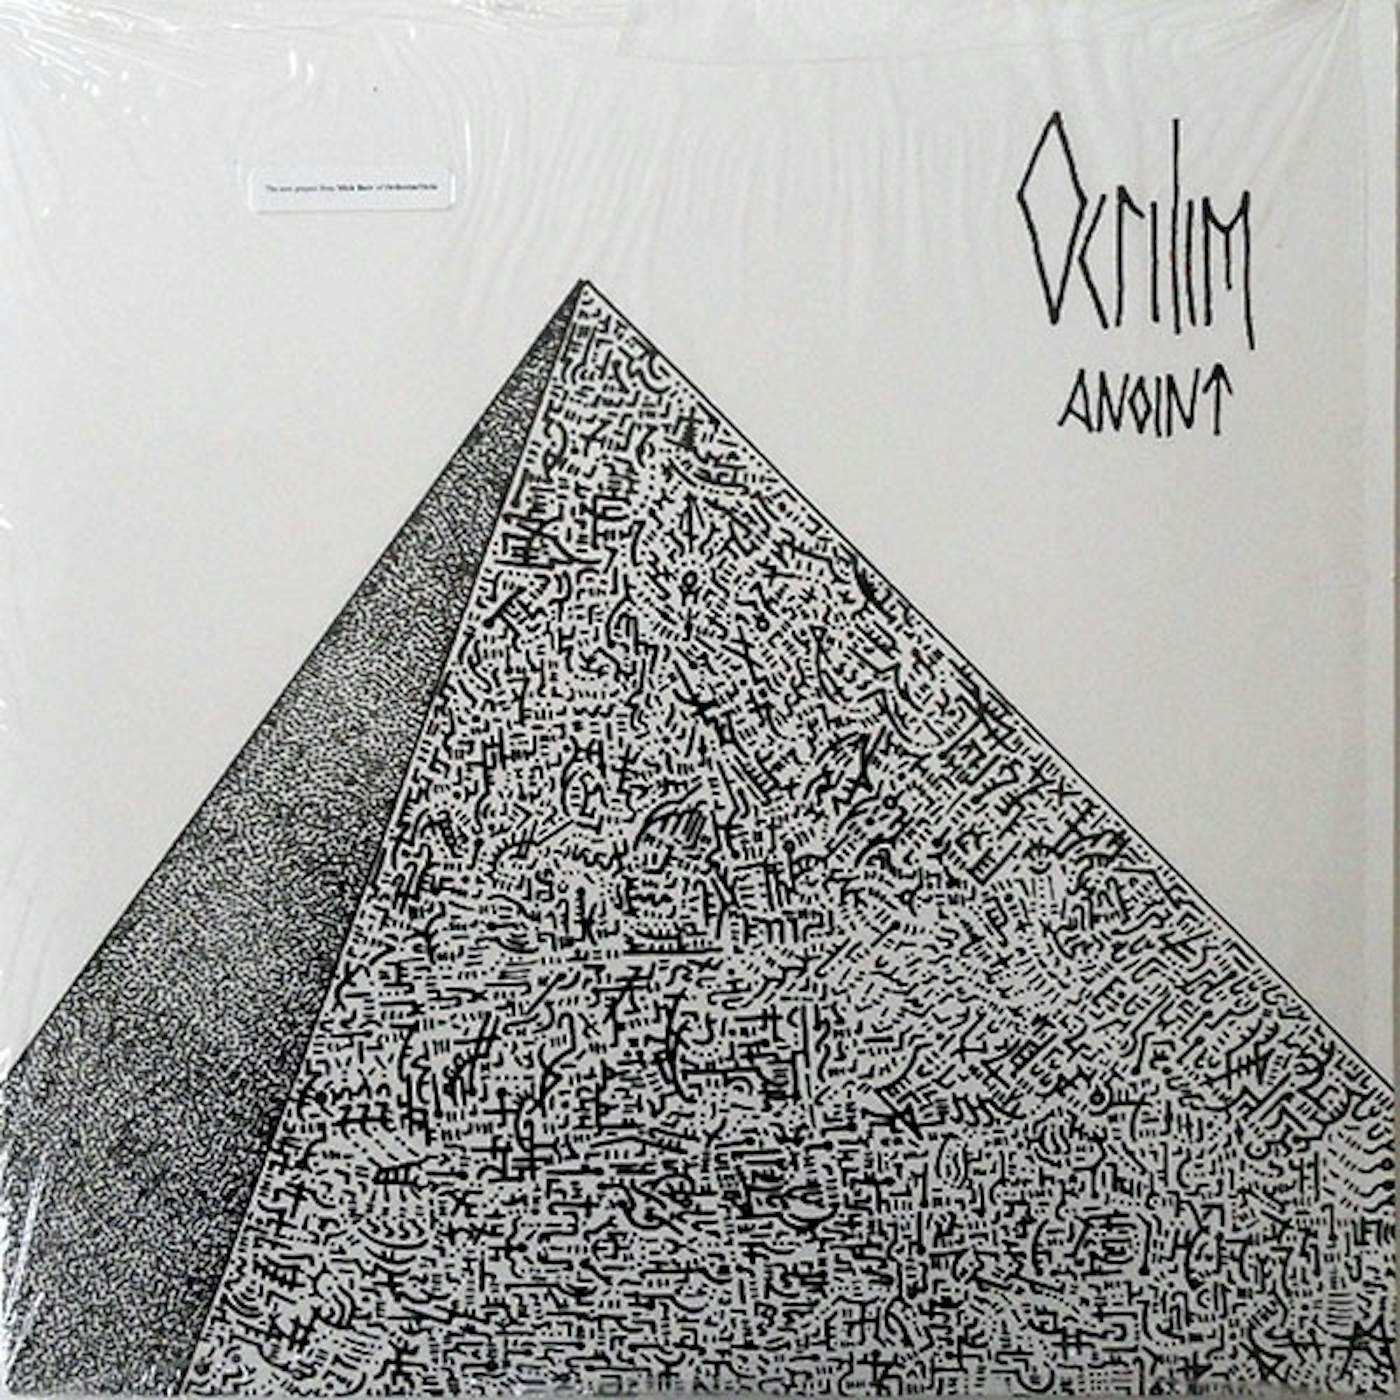 Ocrilim Anoint Vinyl Record